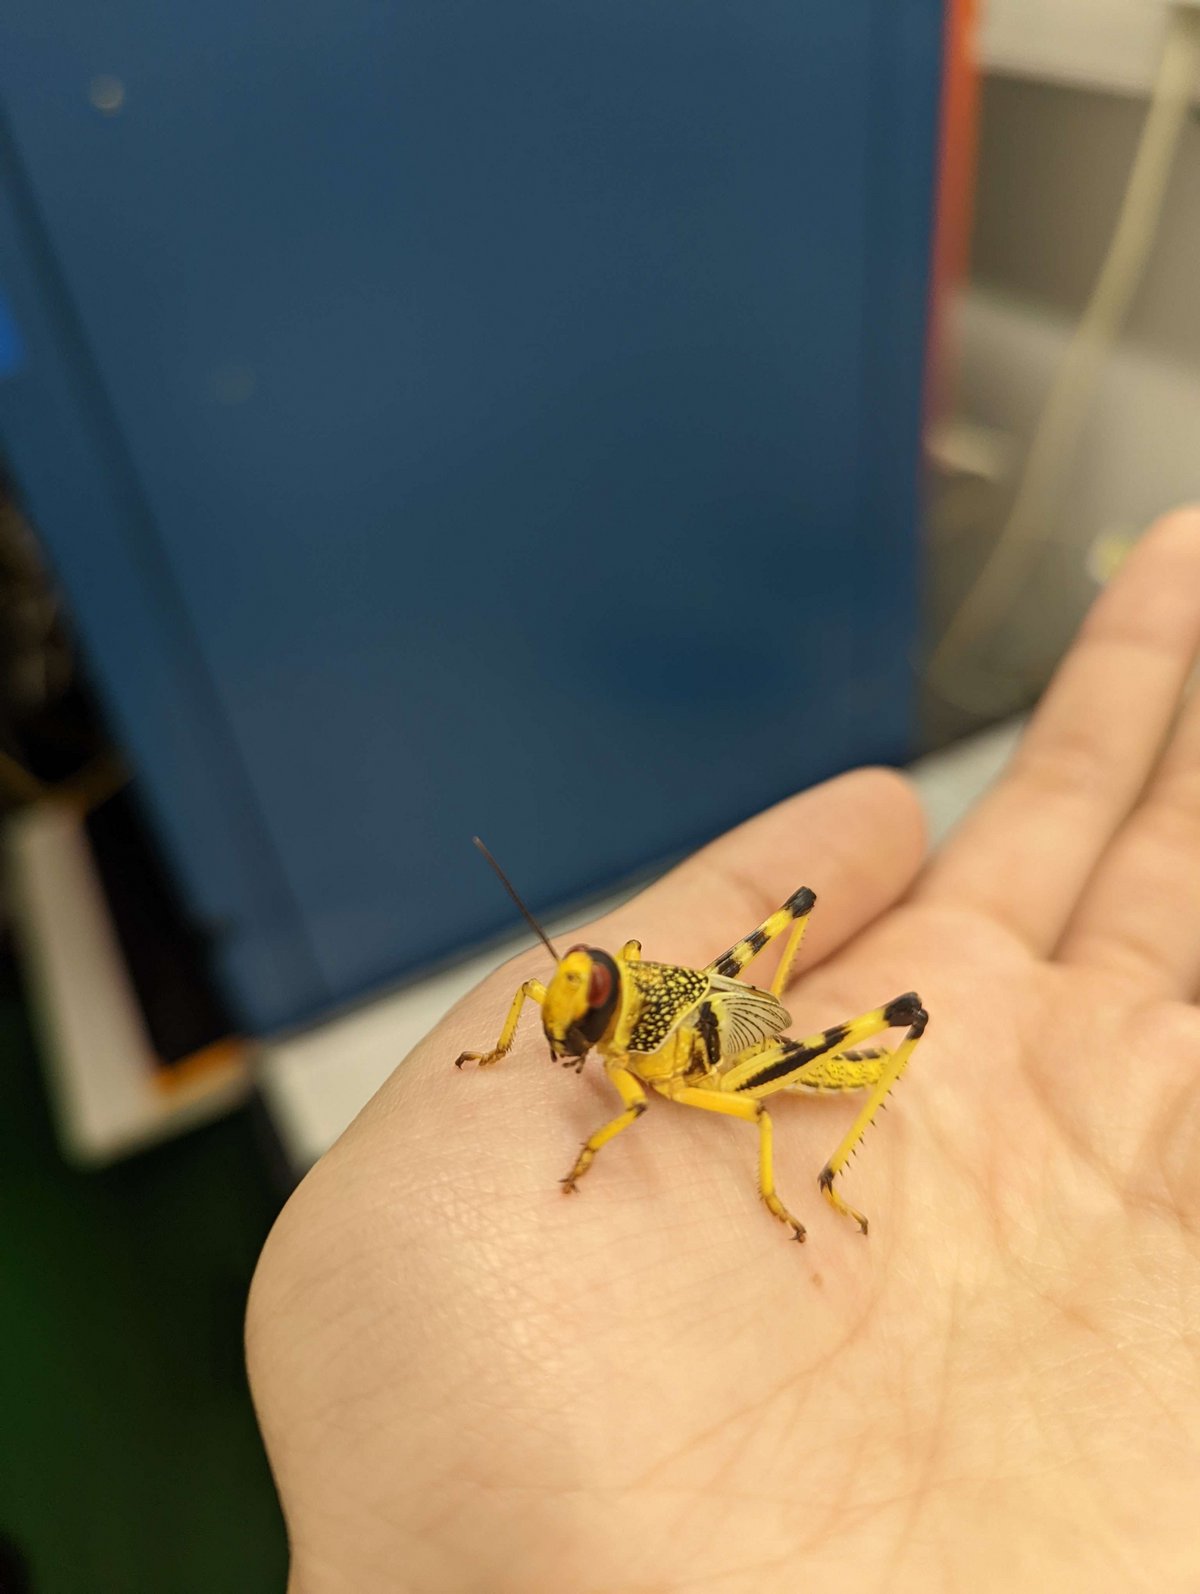 A locust on a hand